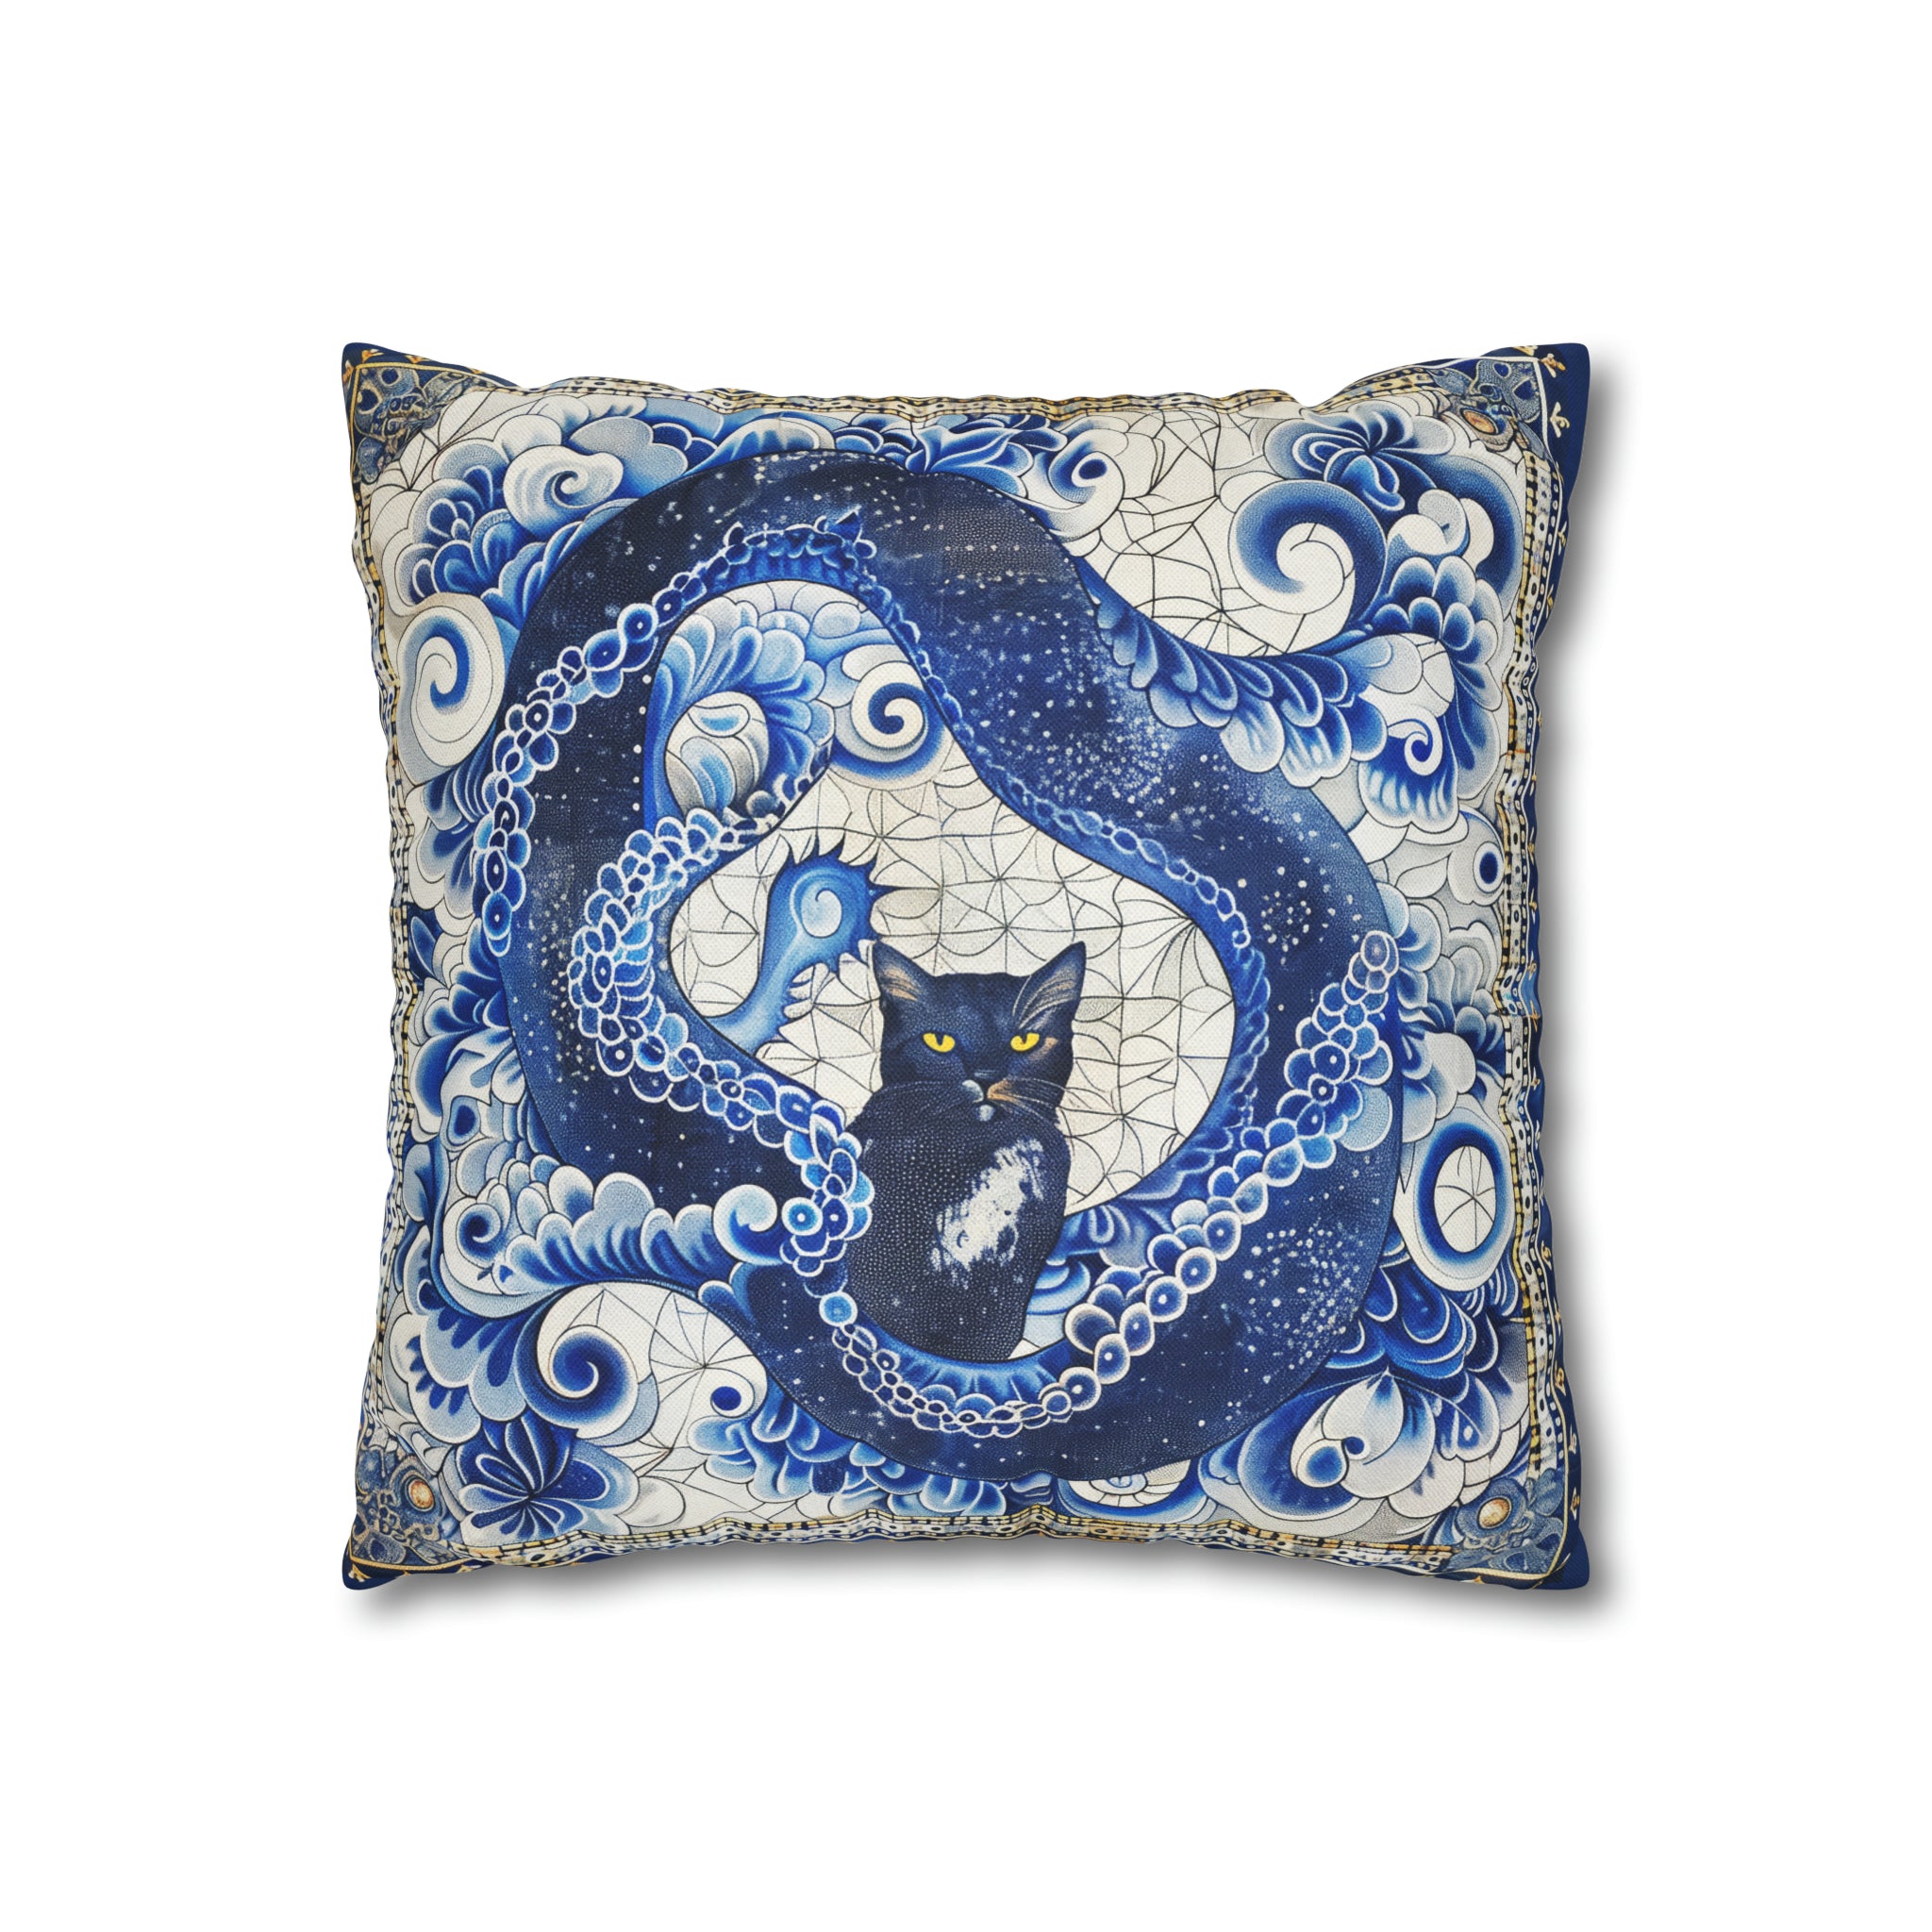 Vintage Blue cat pillow, beautiful animal accent pillow, Home decor for cat lover, unique whimsical cat theme, Portuguese tile style, case only